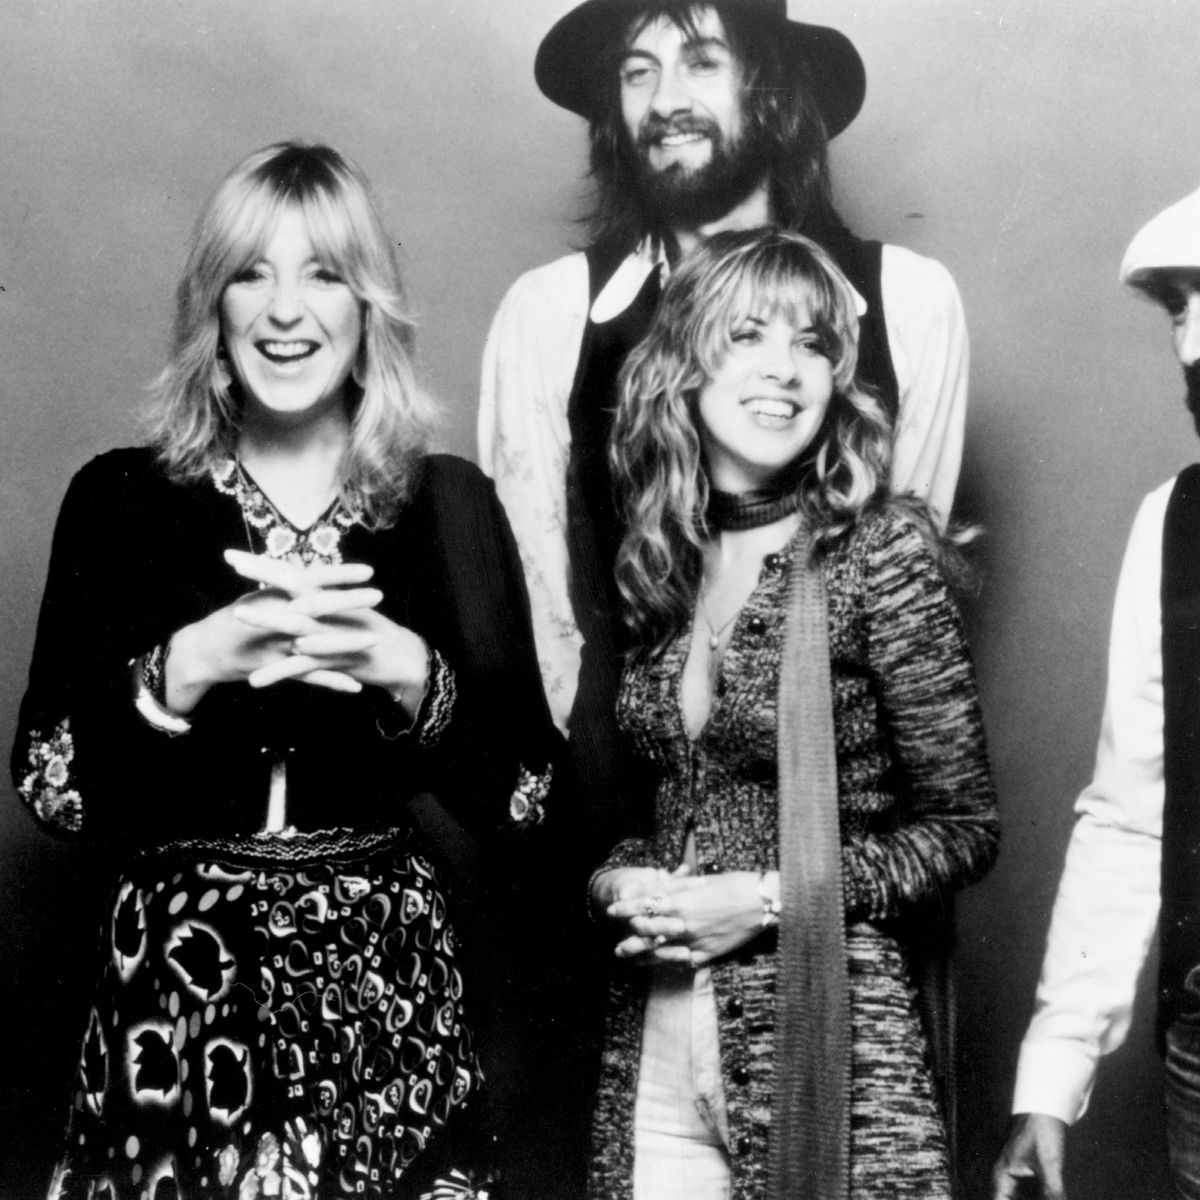 Seventies fashion is back - let's all dress like Fleetwood Mac